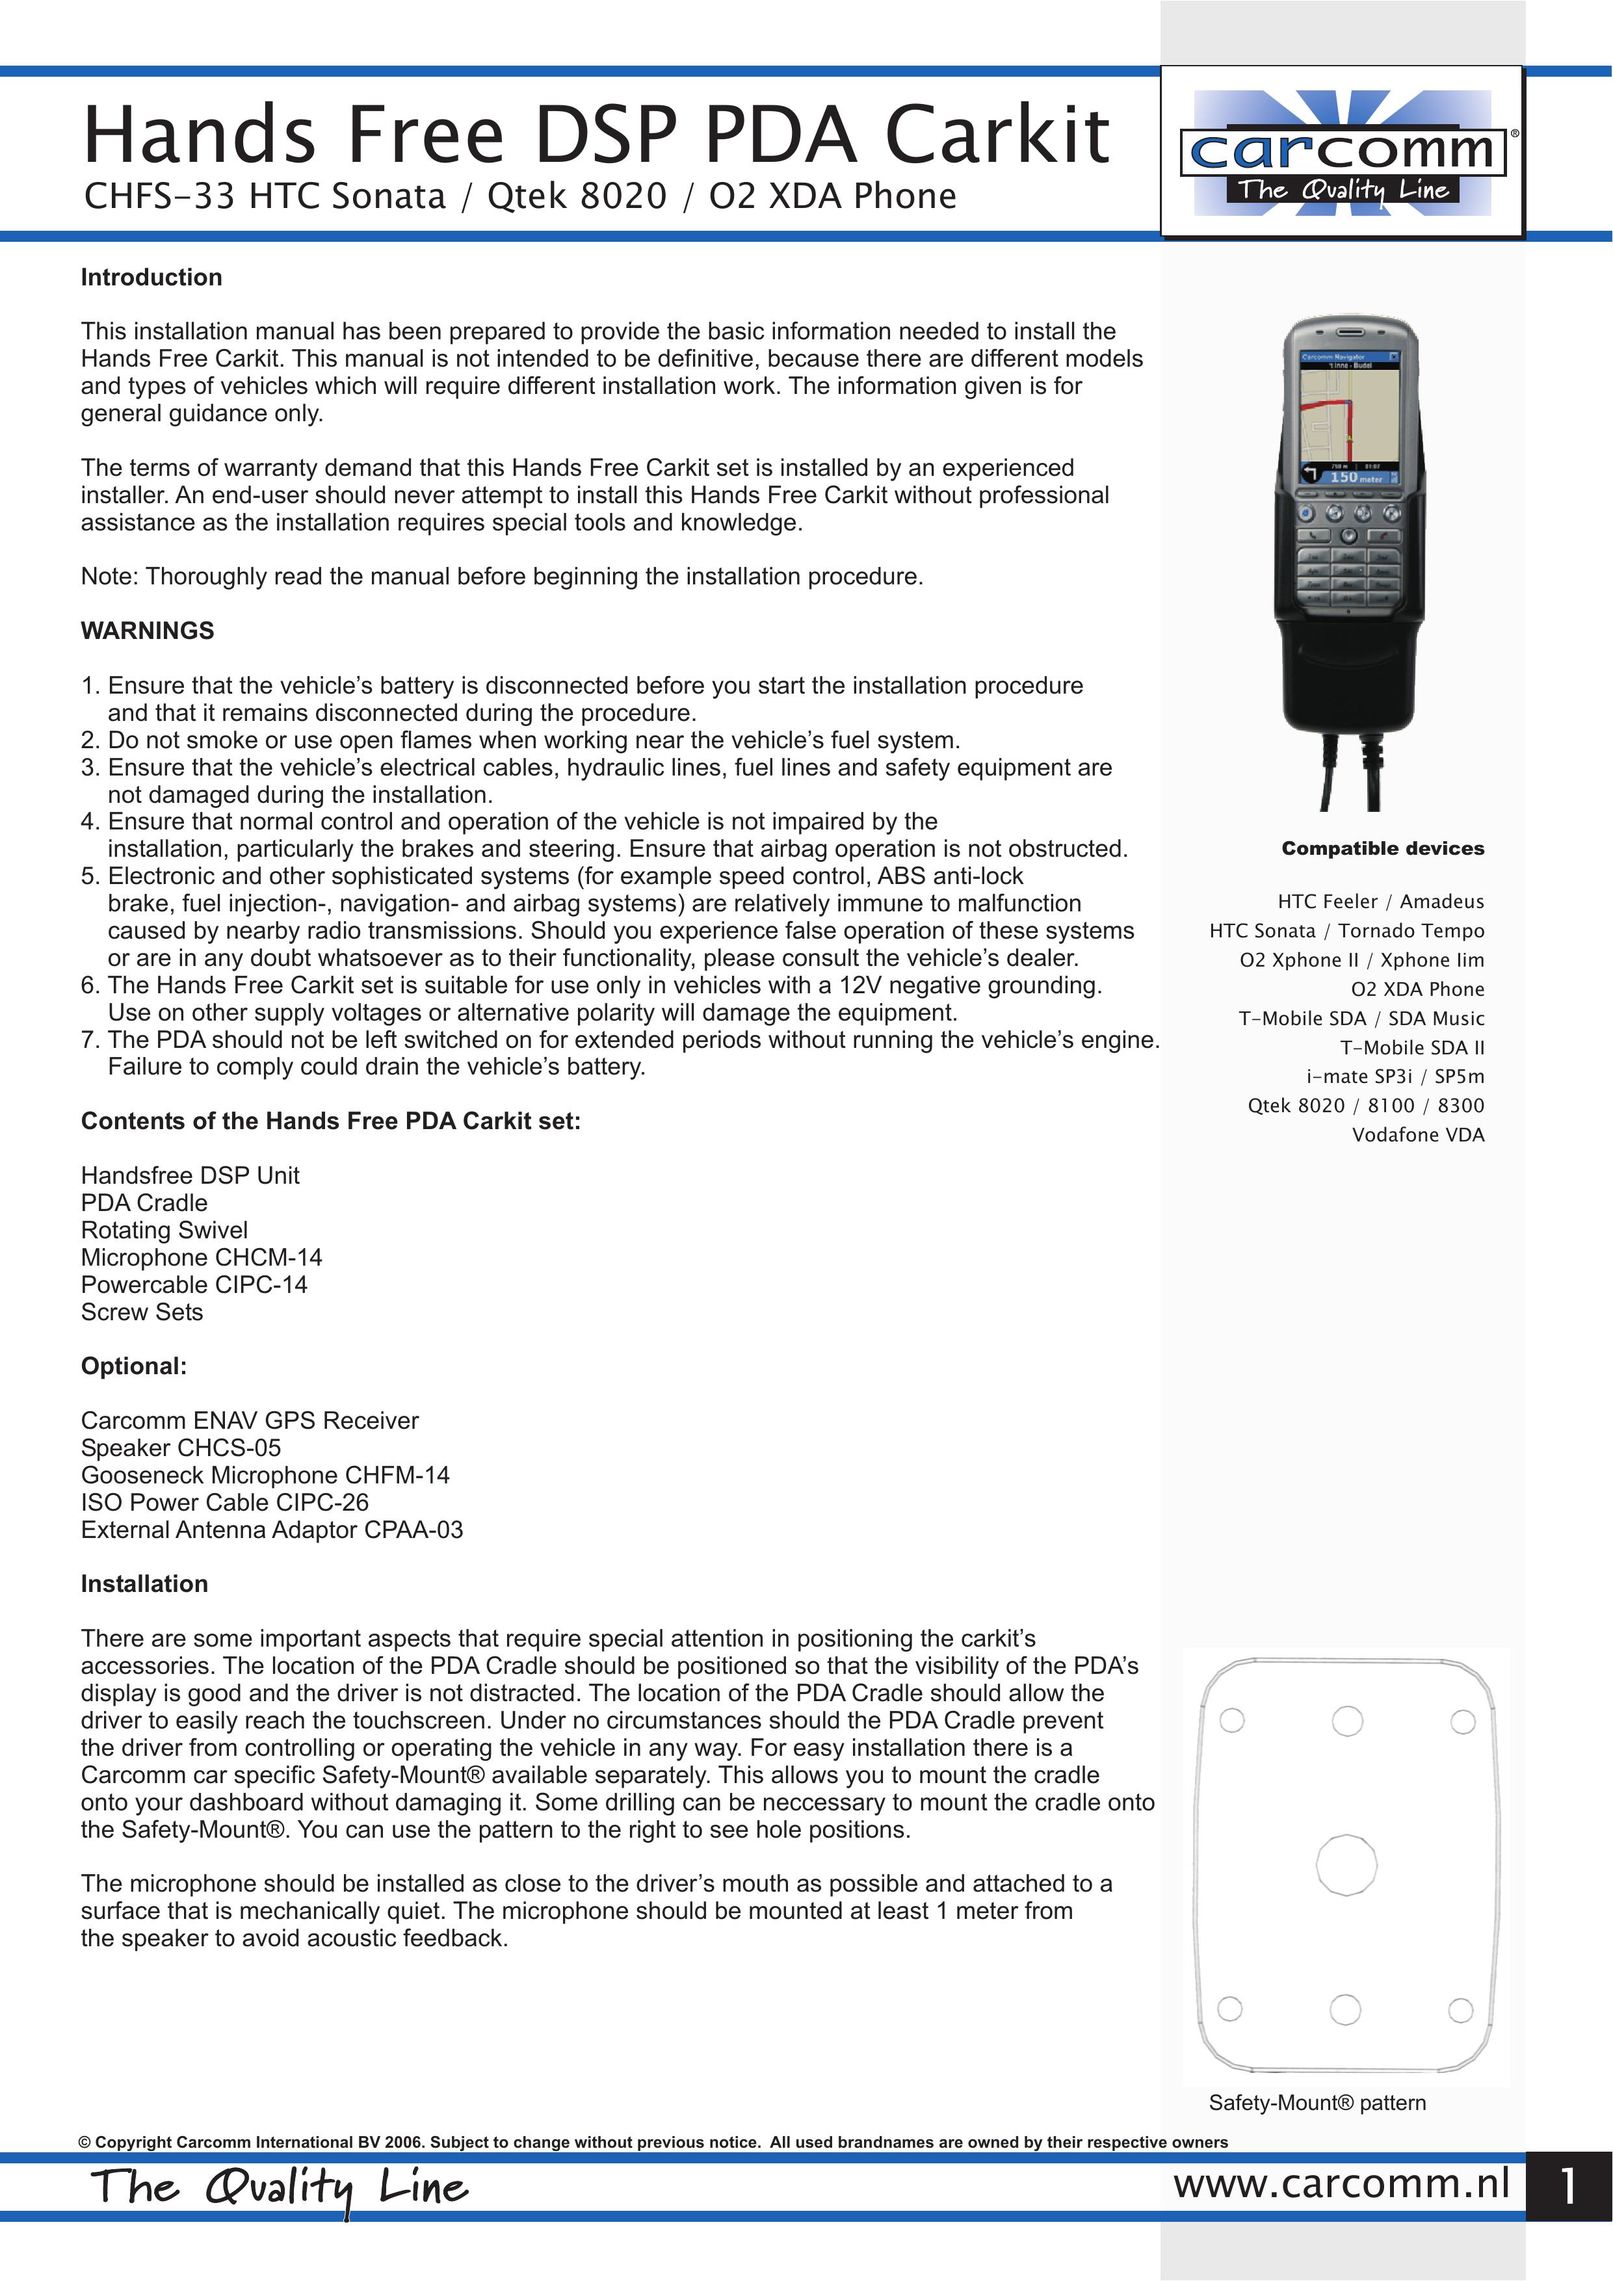 Carcomm QTEK 8020 Cell Phone User Manual